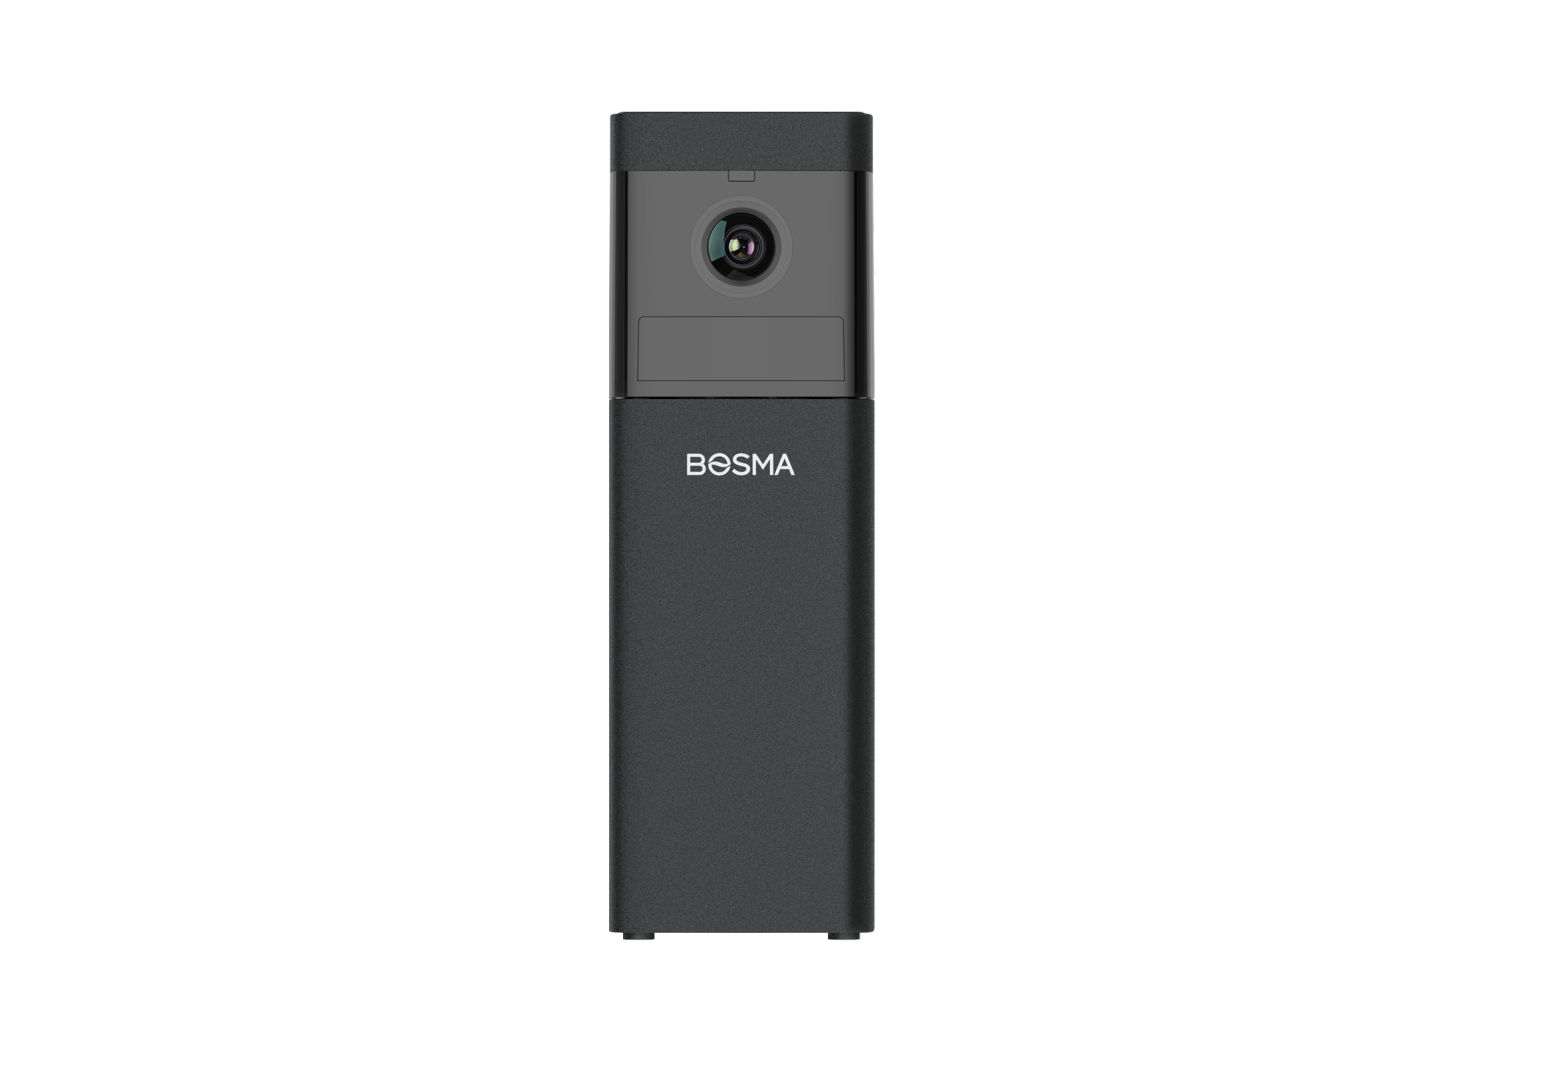 BOSMA X1 360 Security Camera User Guide